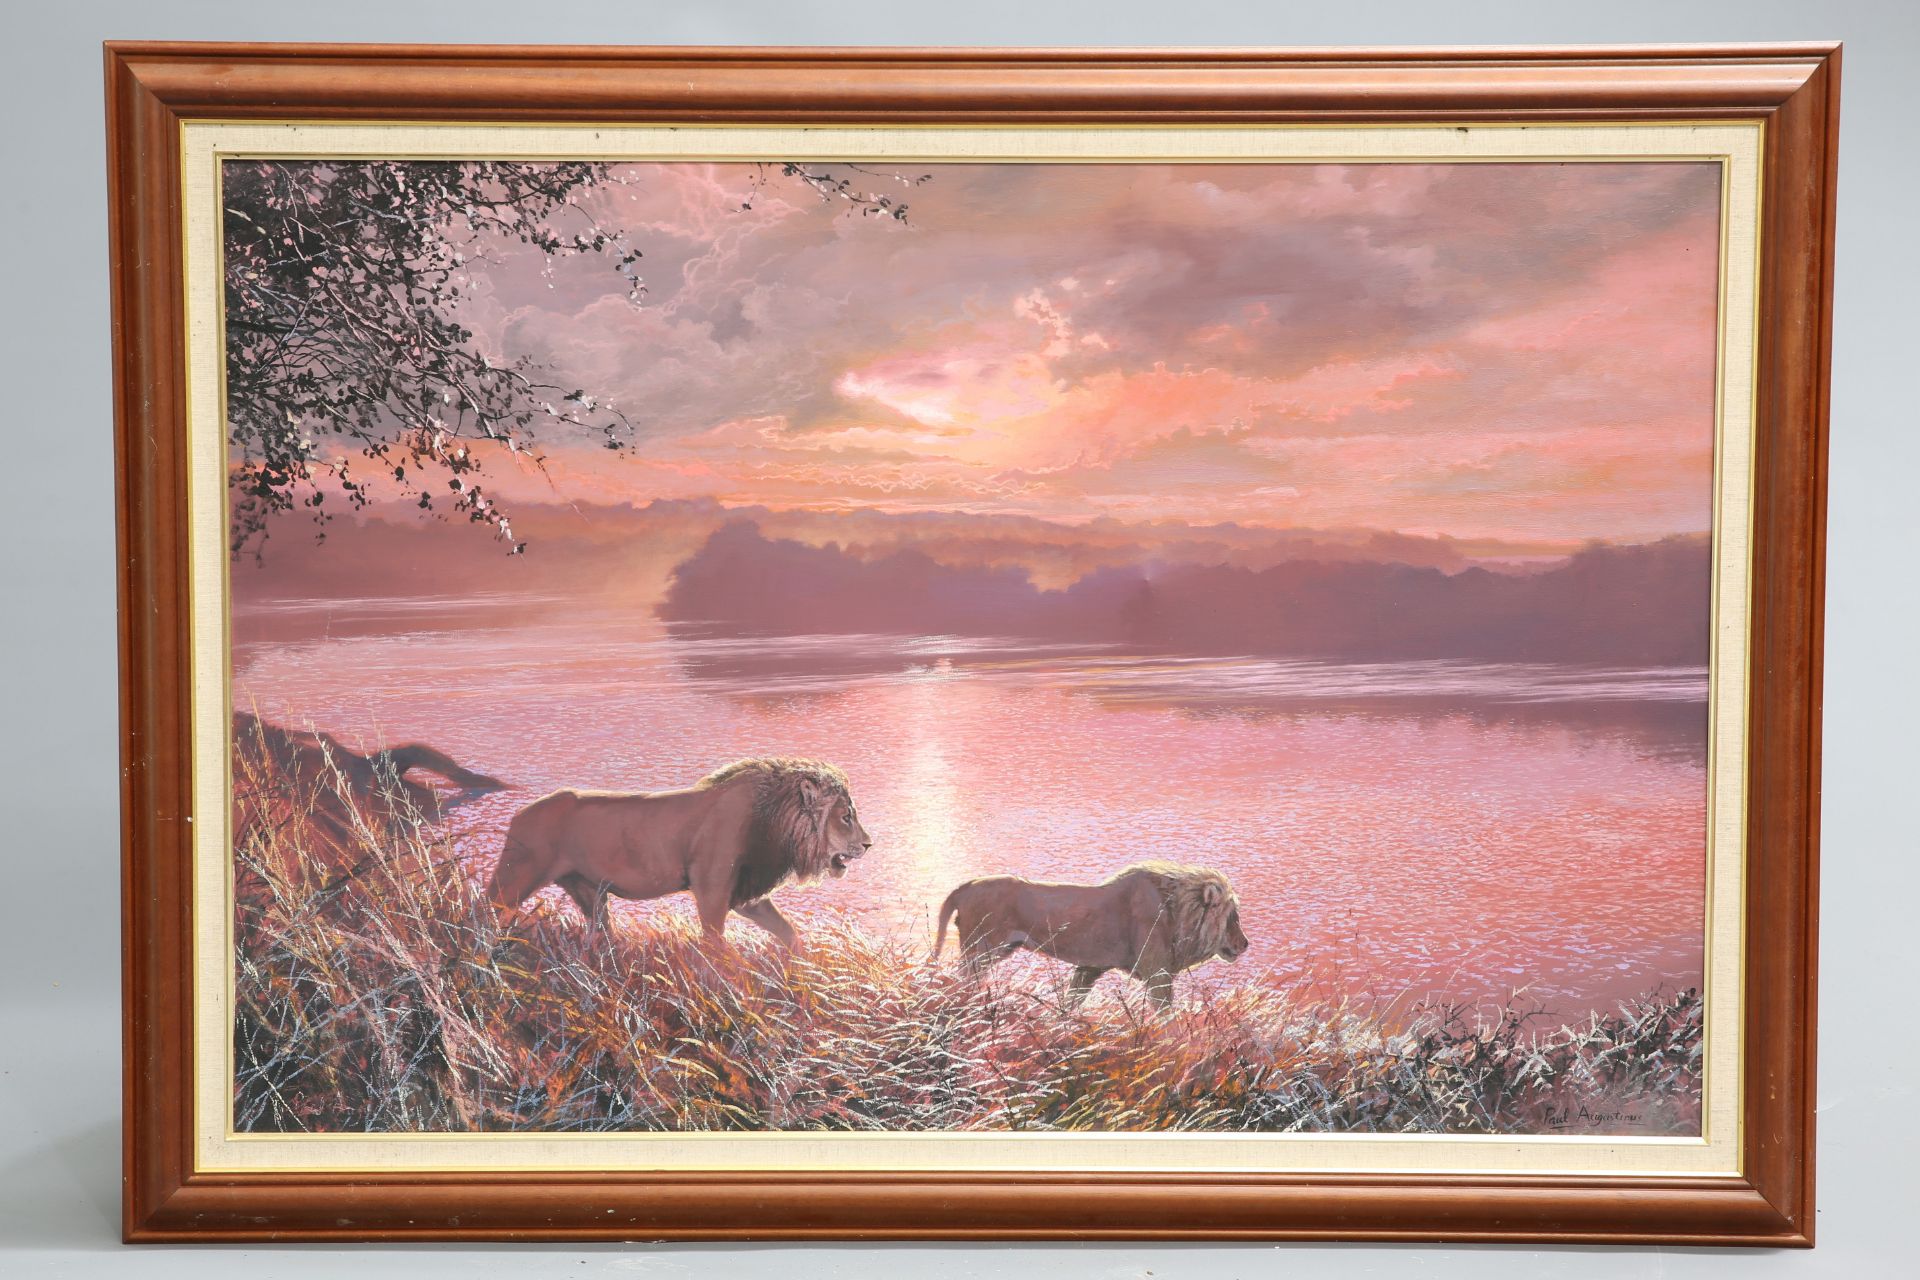 ~ PAUL AUGUSTINUS (DANISH, BORN 1952), "CHOBE SUNSET", signed lower right, oil on canvas, framed.